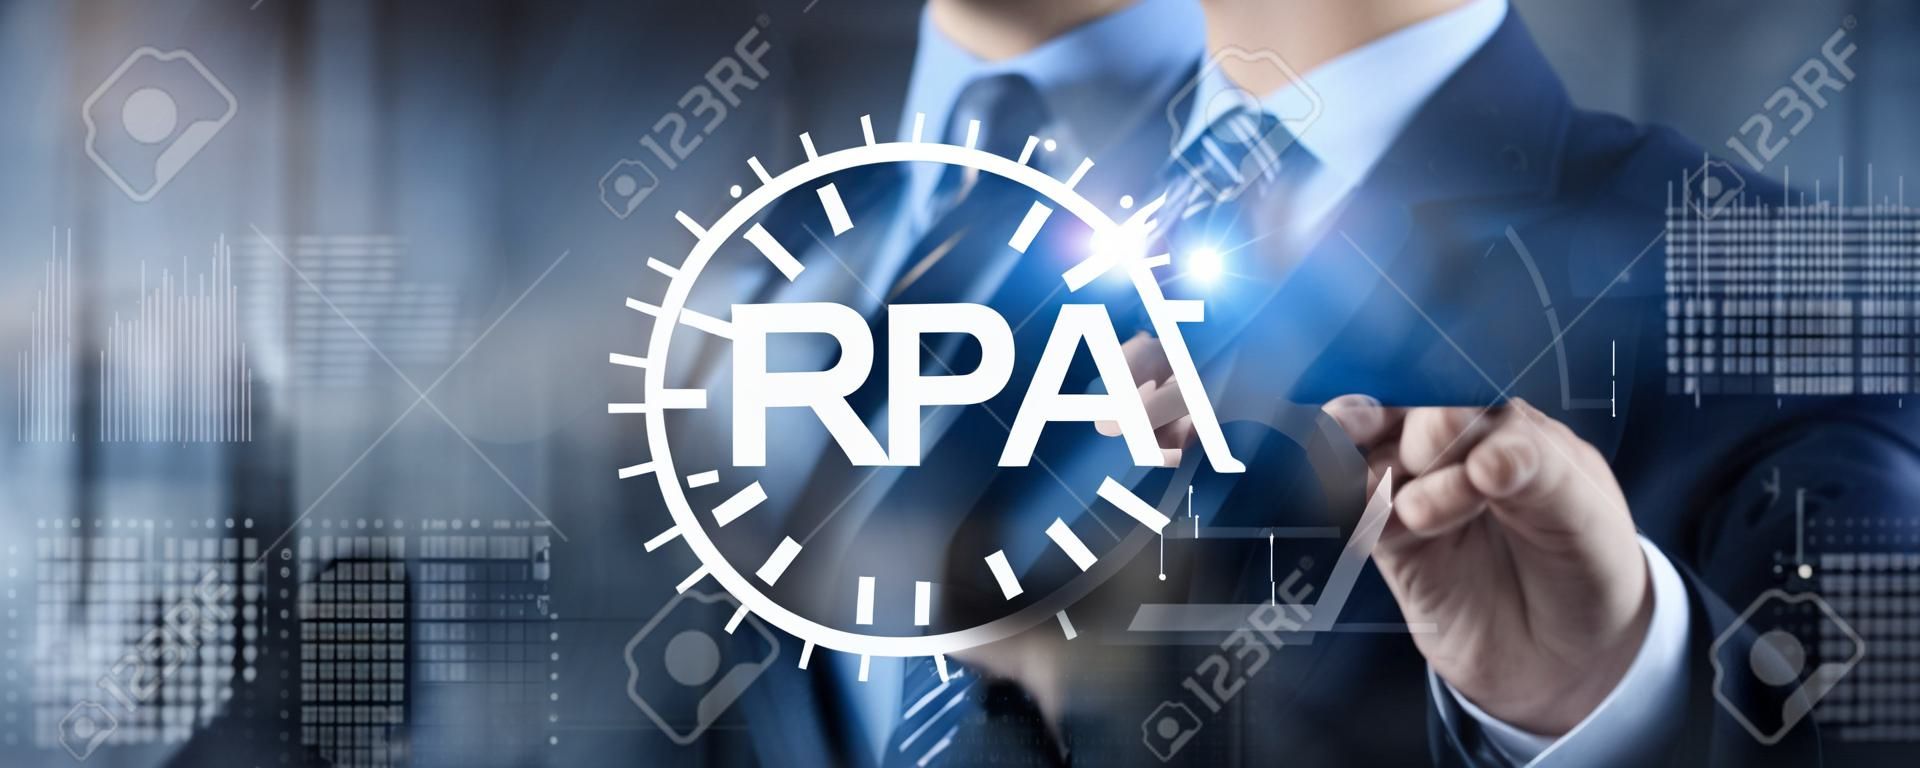 RPA Robotic process automation business process optimization innovation technology concept.